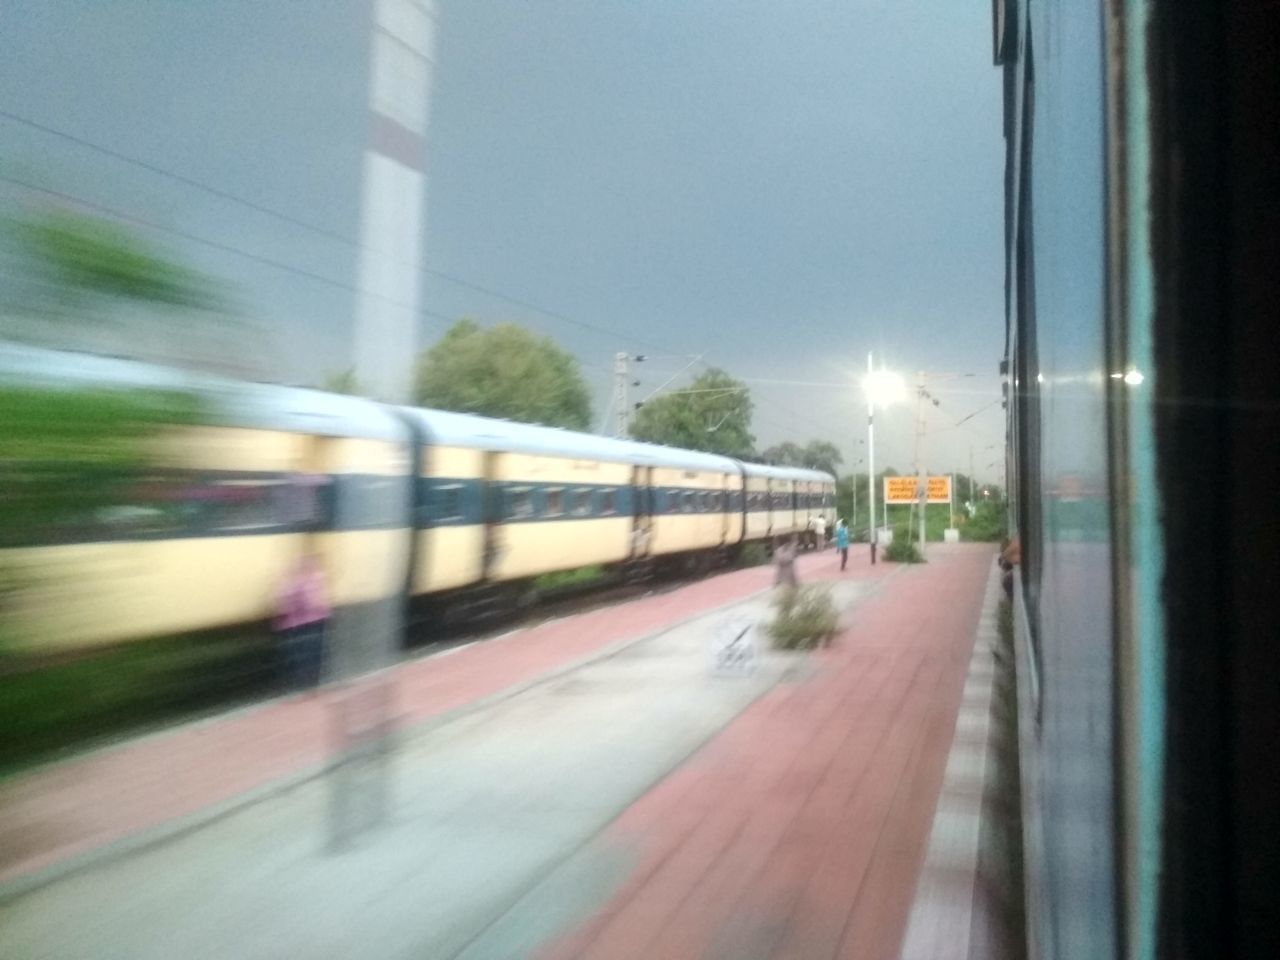 BLURRED MOTION OF TRAIN AT RAILROAD STATION PLATFORM AGAINST SKY